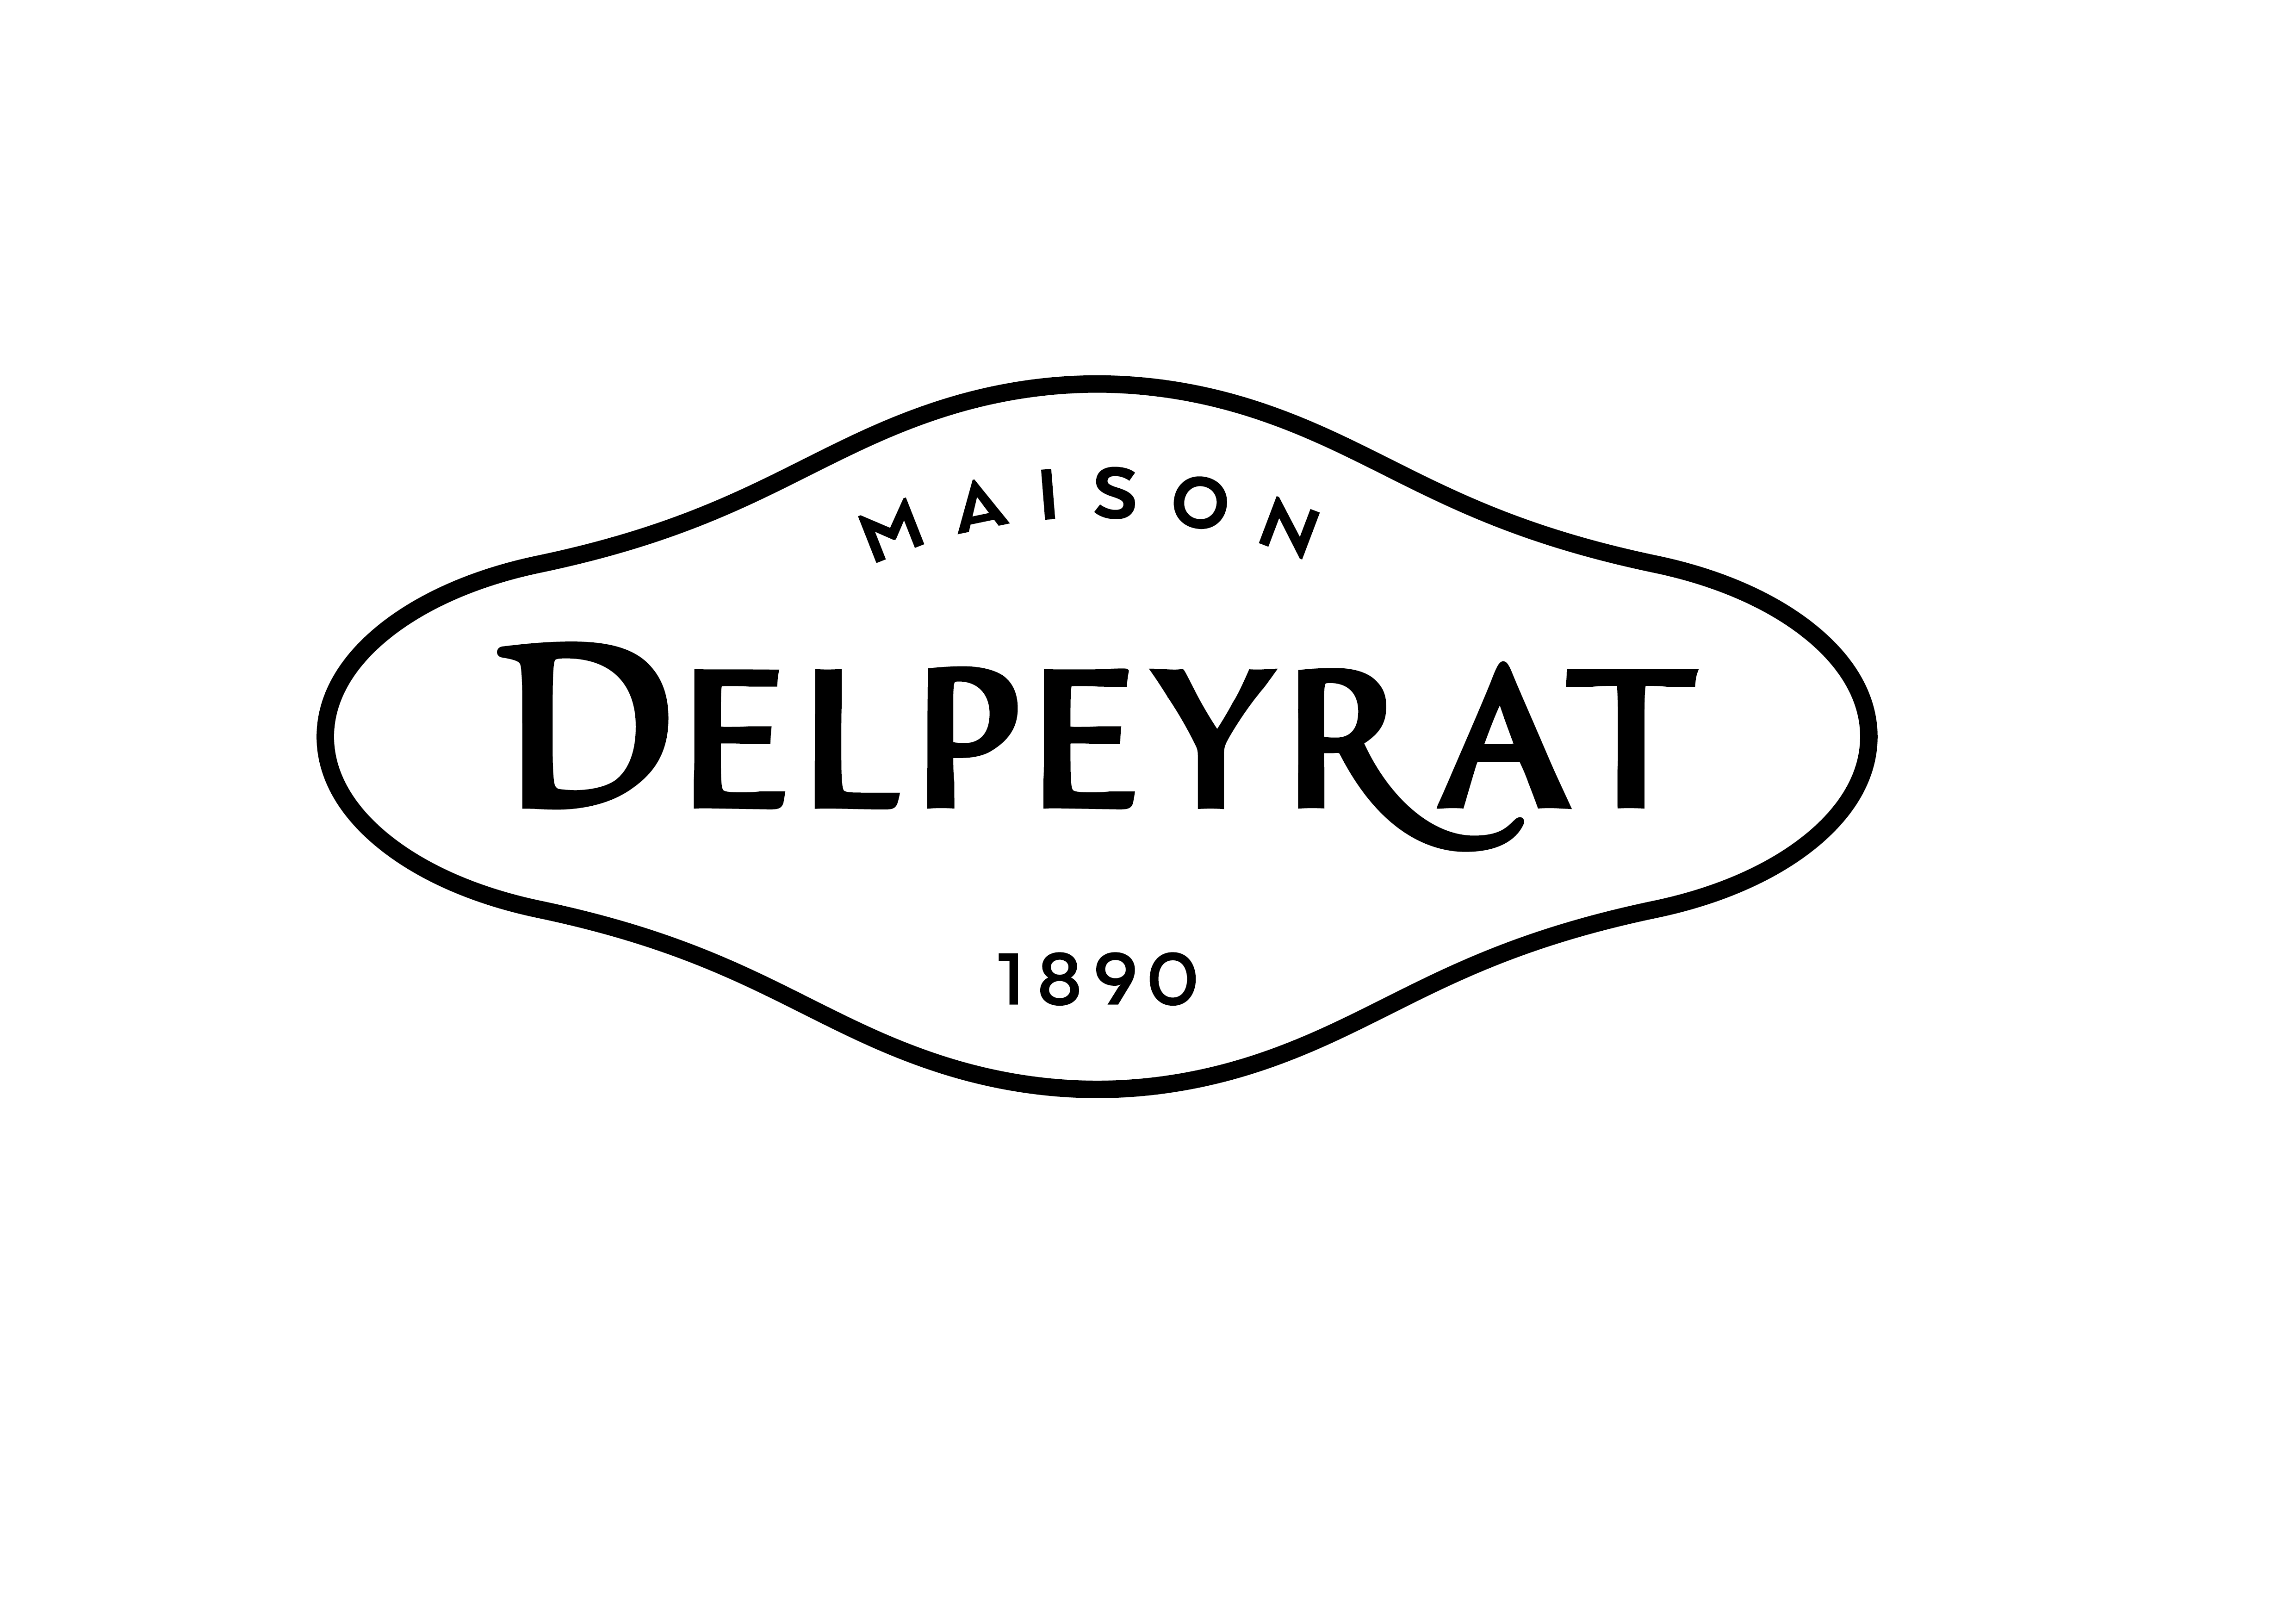 Logo DELPEYRAT